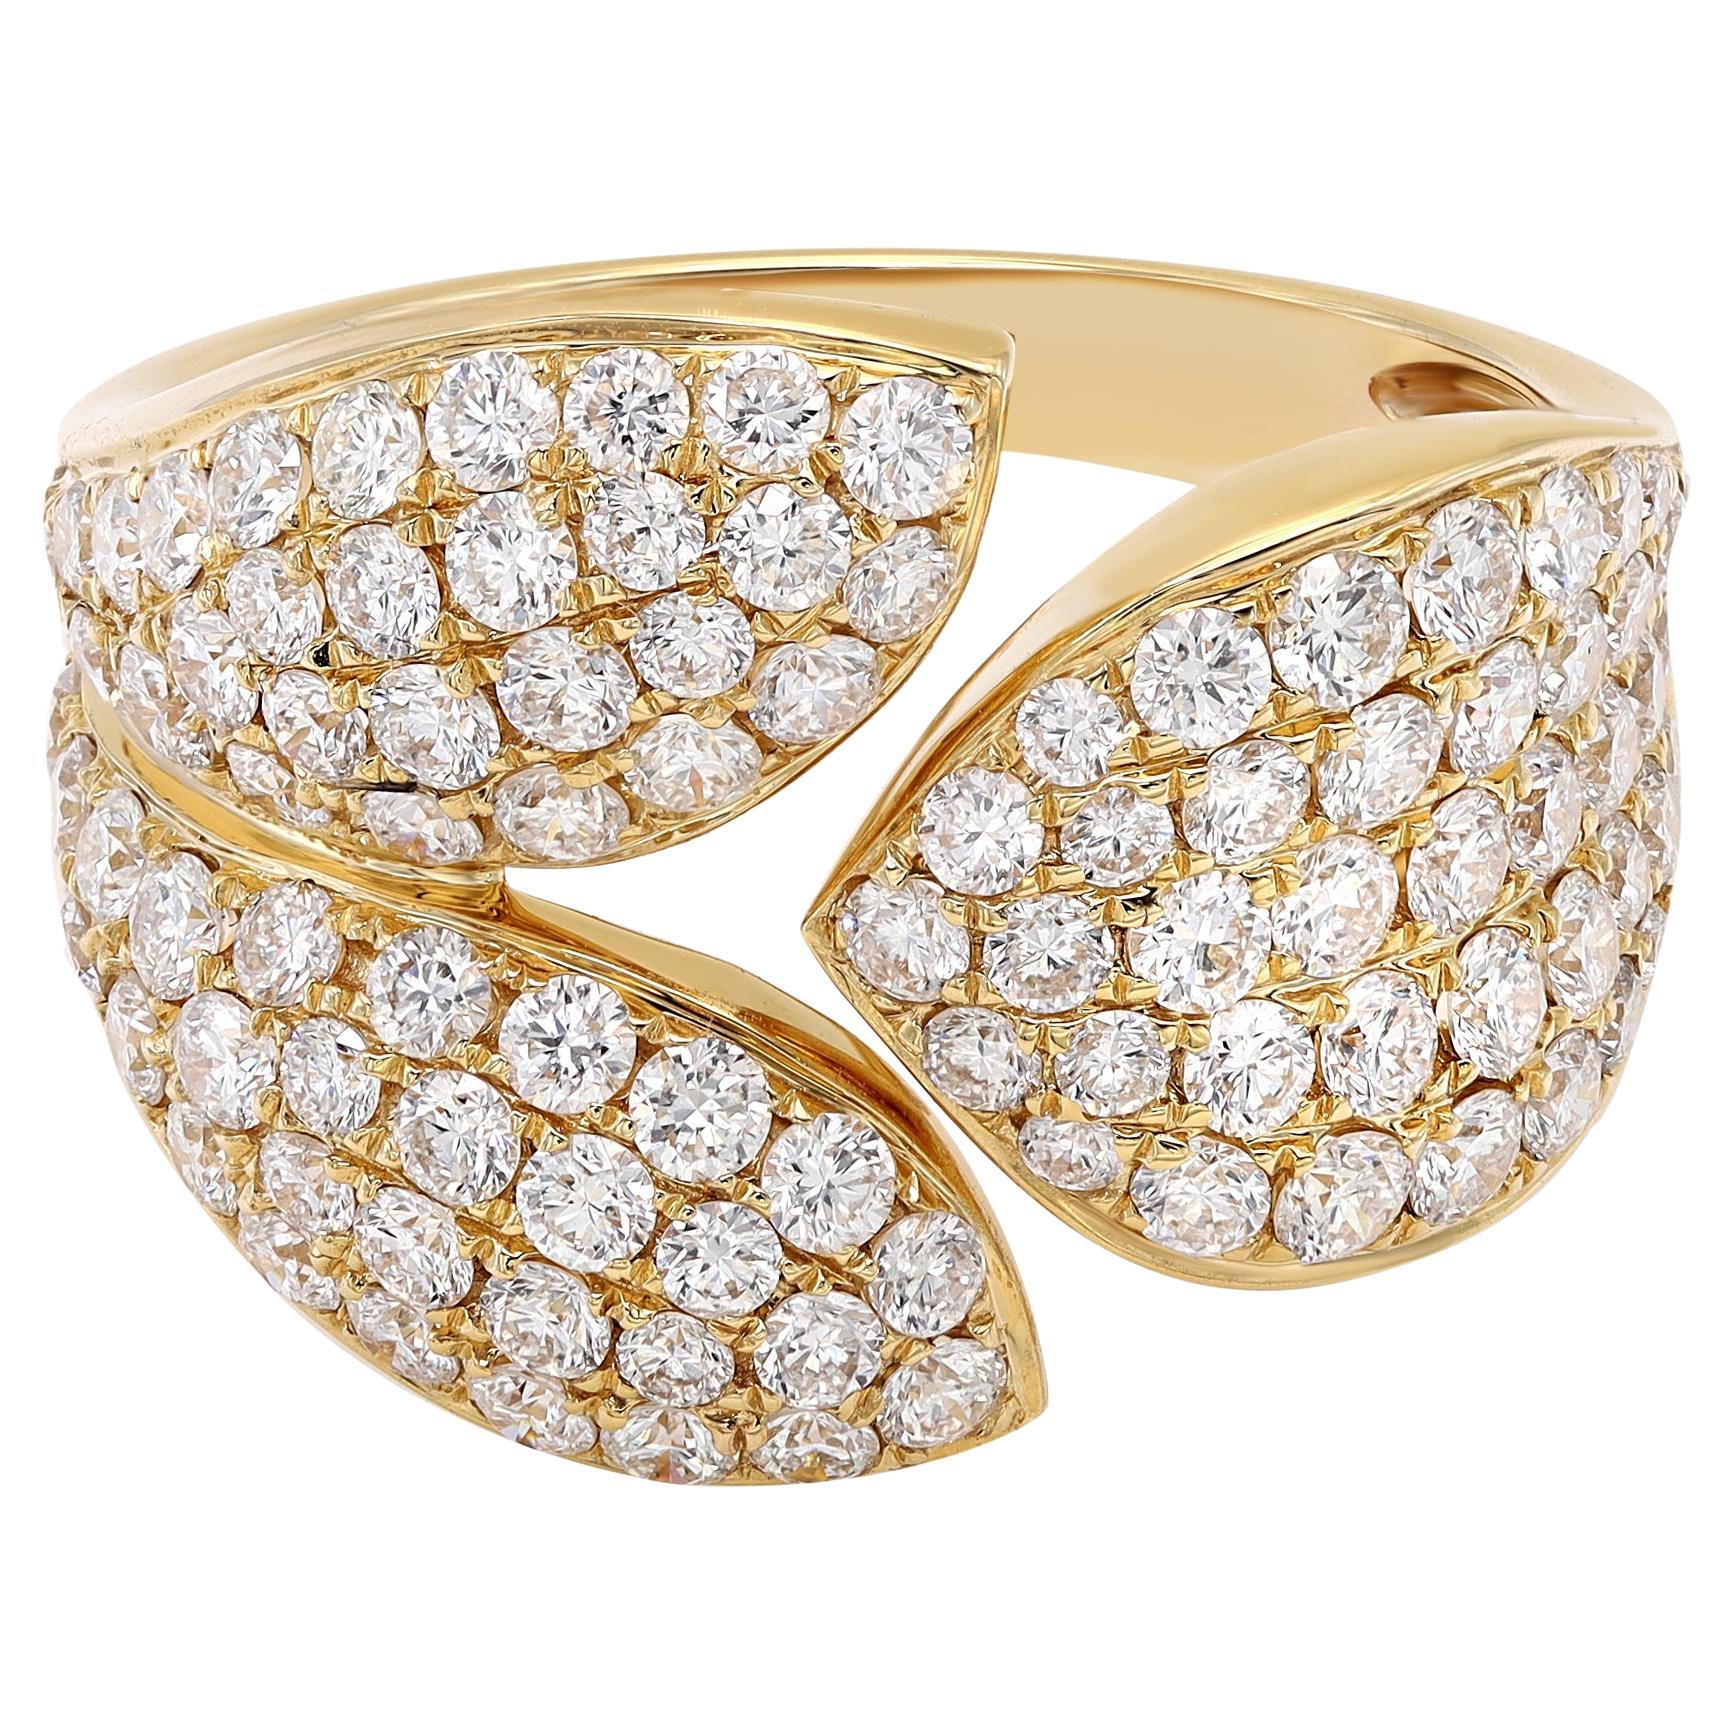 Rachel Koen Pave Set Round Cut Diamond Ring 18K Yellow Gold 2.00Cttw For Sale